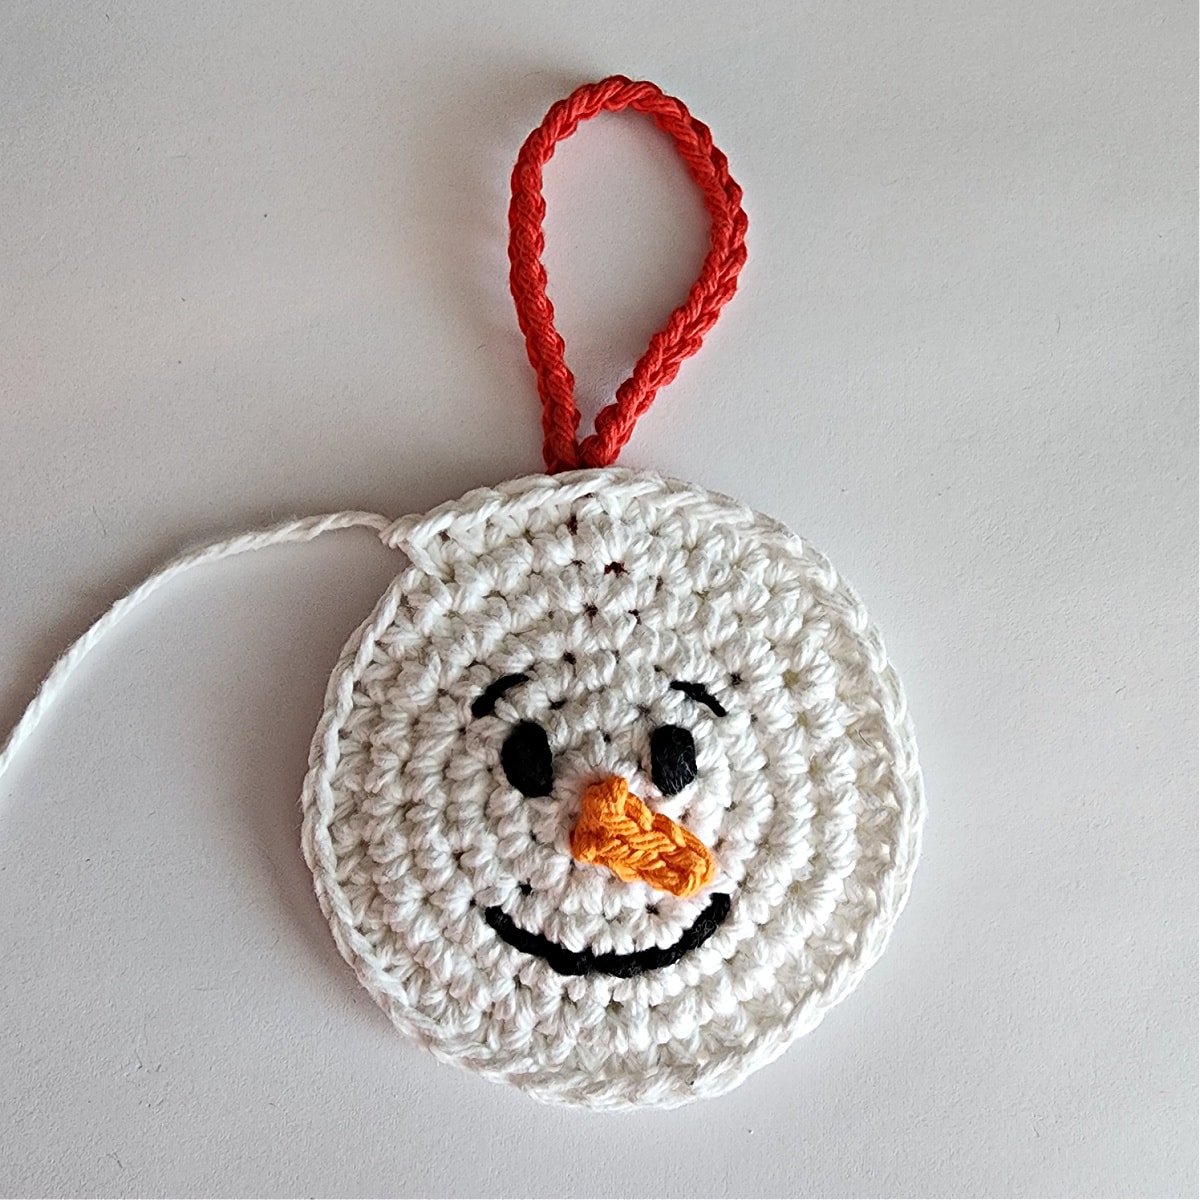 white crochet snowman heads joined with single crochet